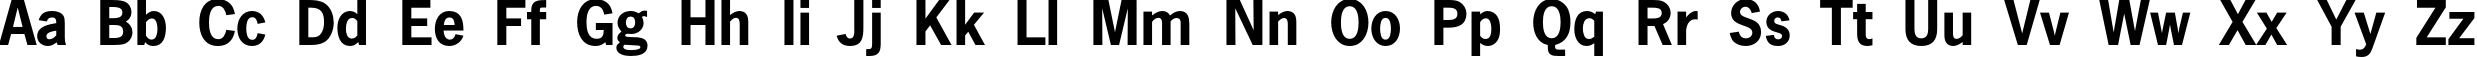 Пример написания английского алфавита шрифтом NewsPaperC Bold